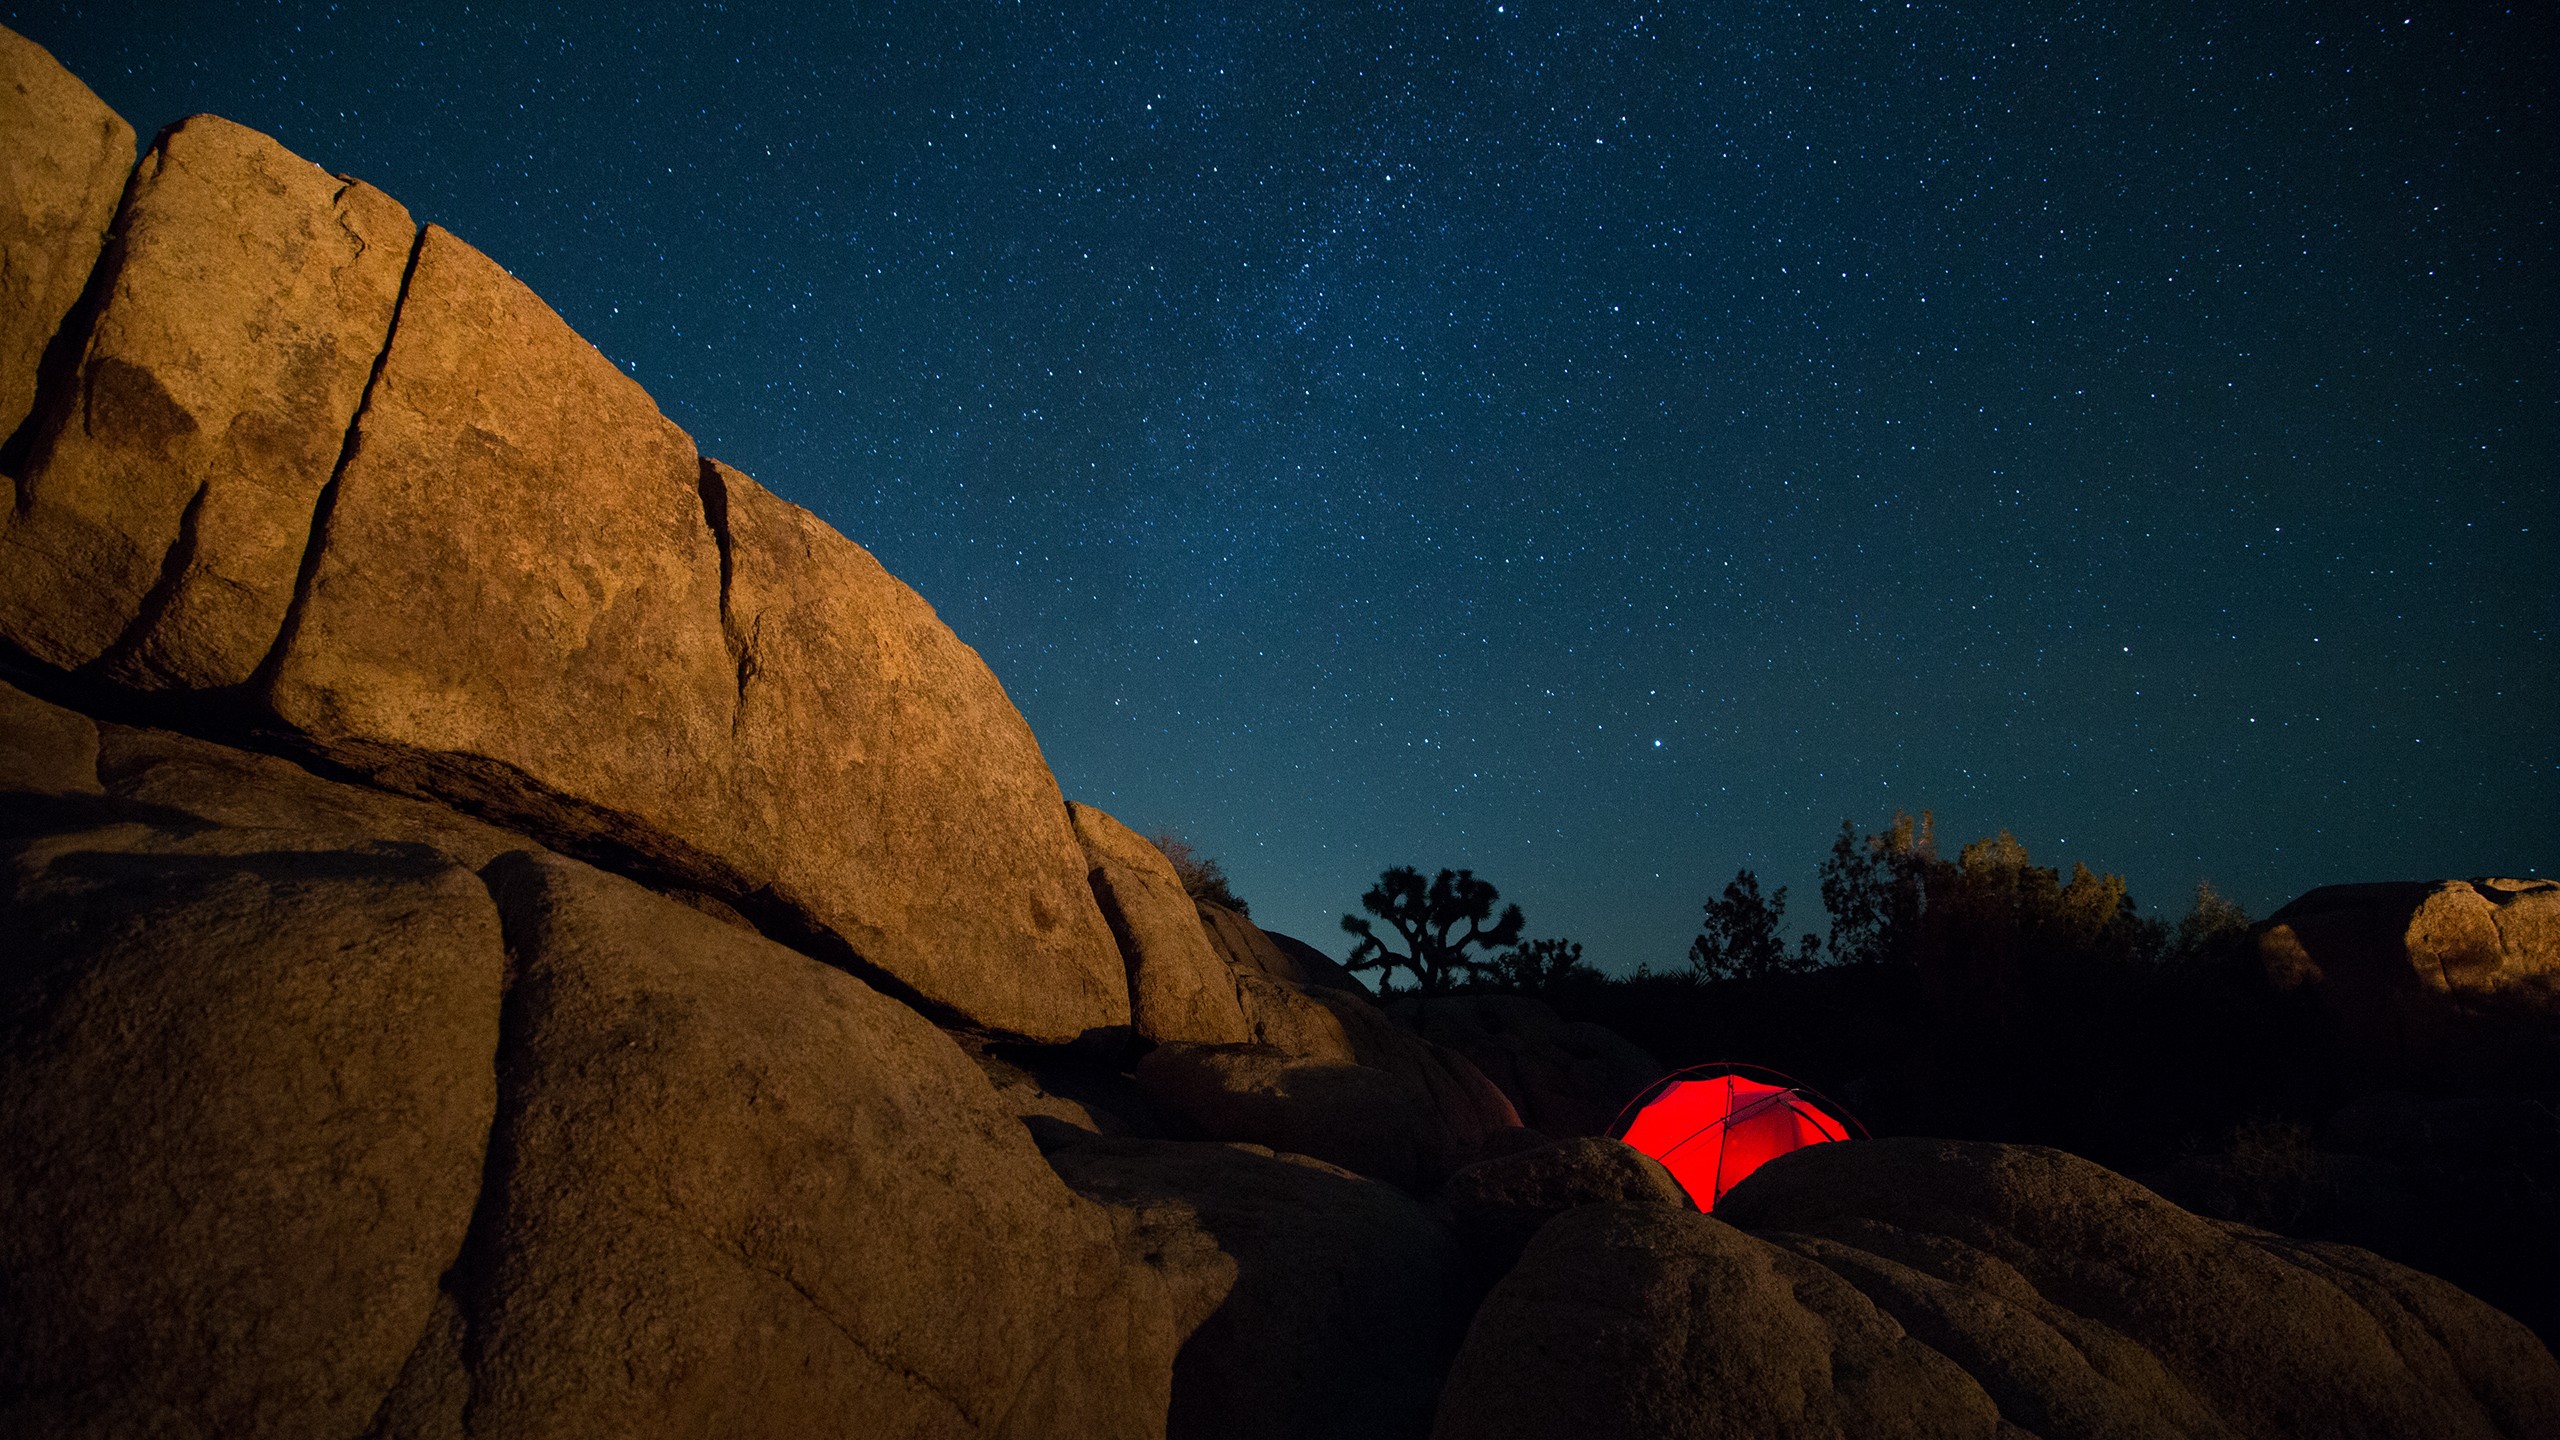 General 2560x1440 nature stars landscape sky night tent rocks low light